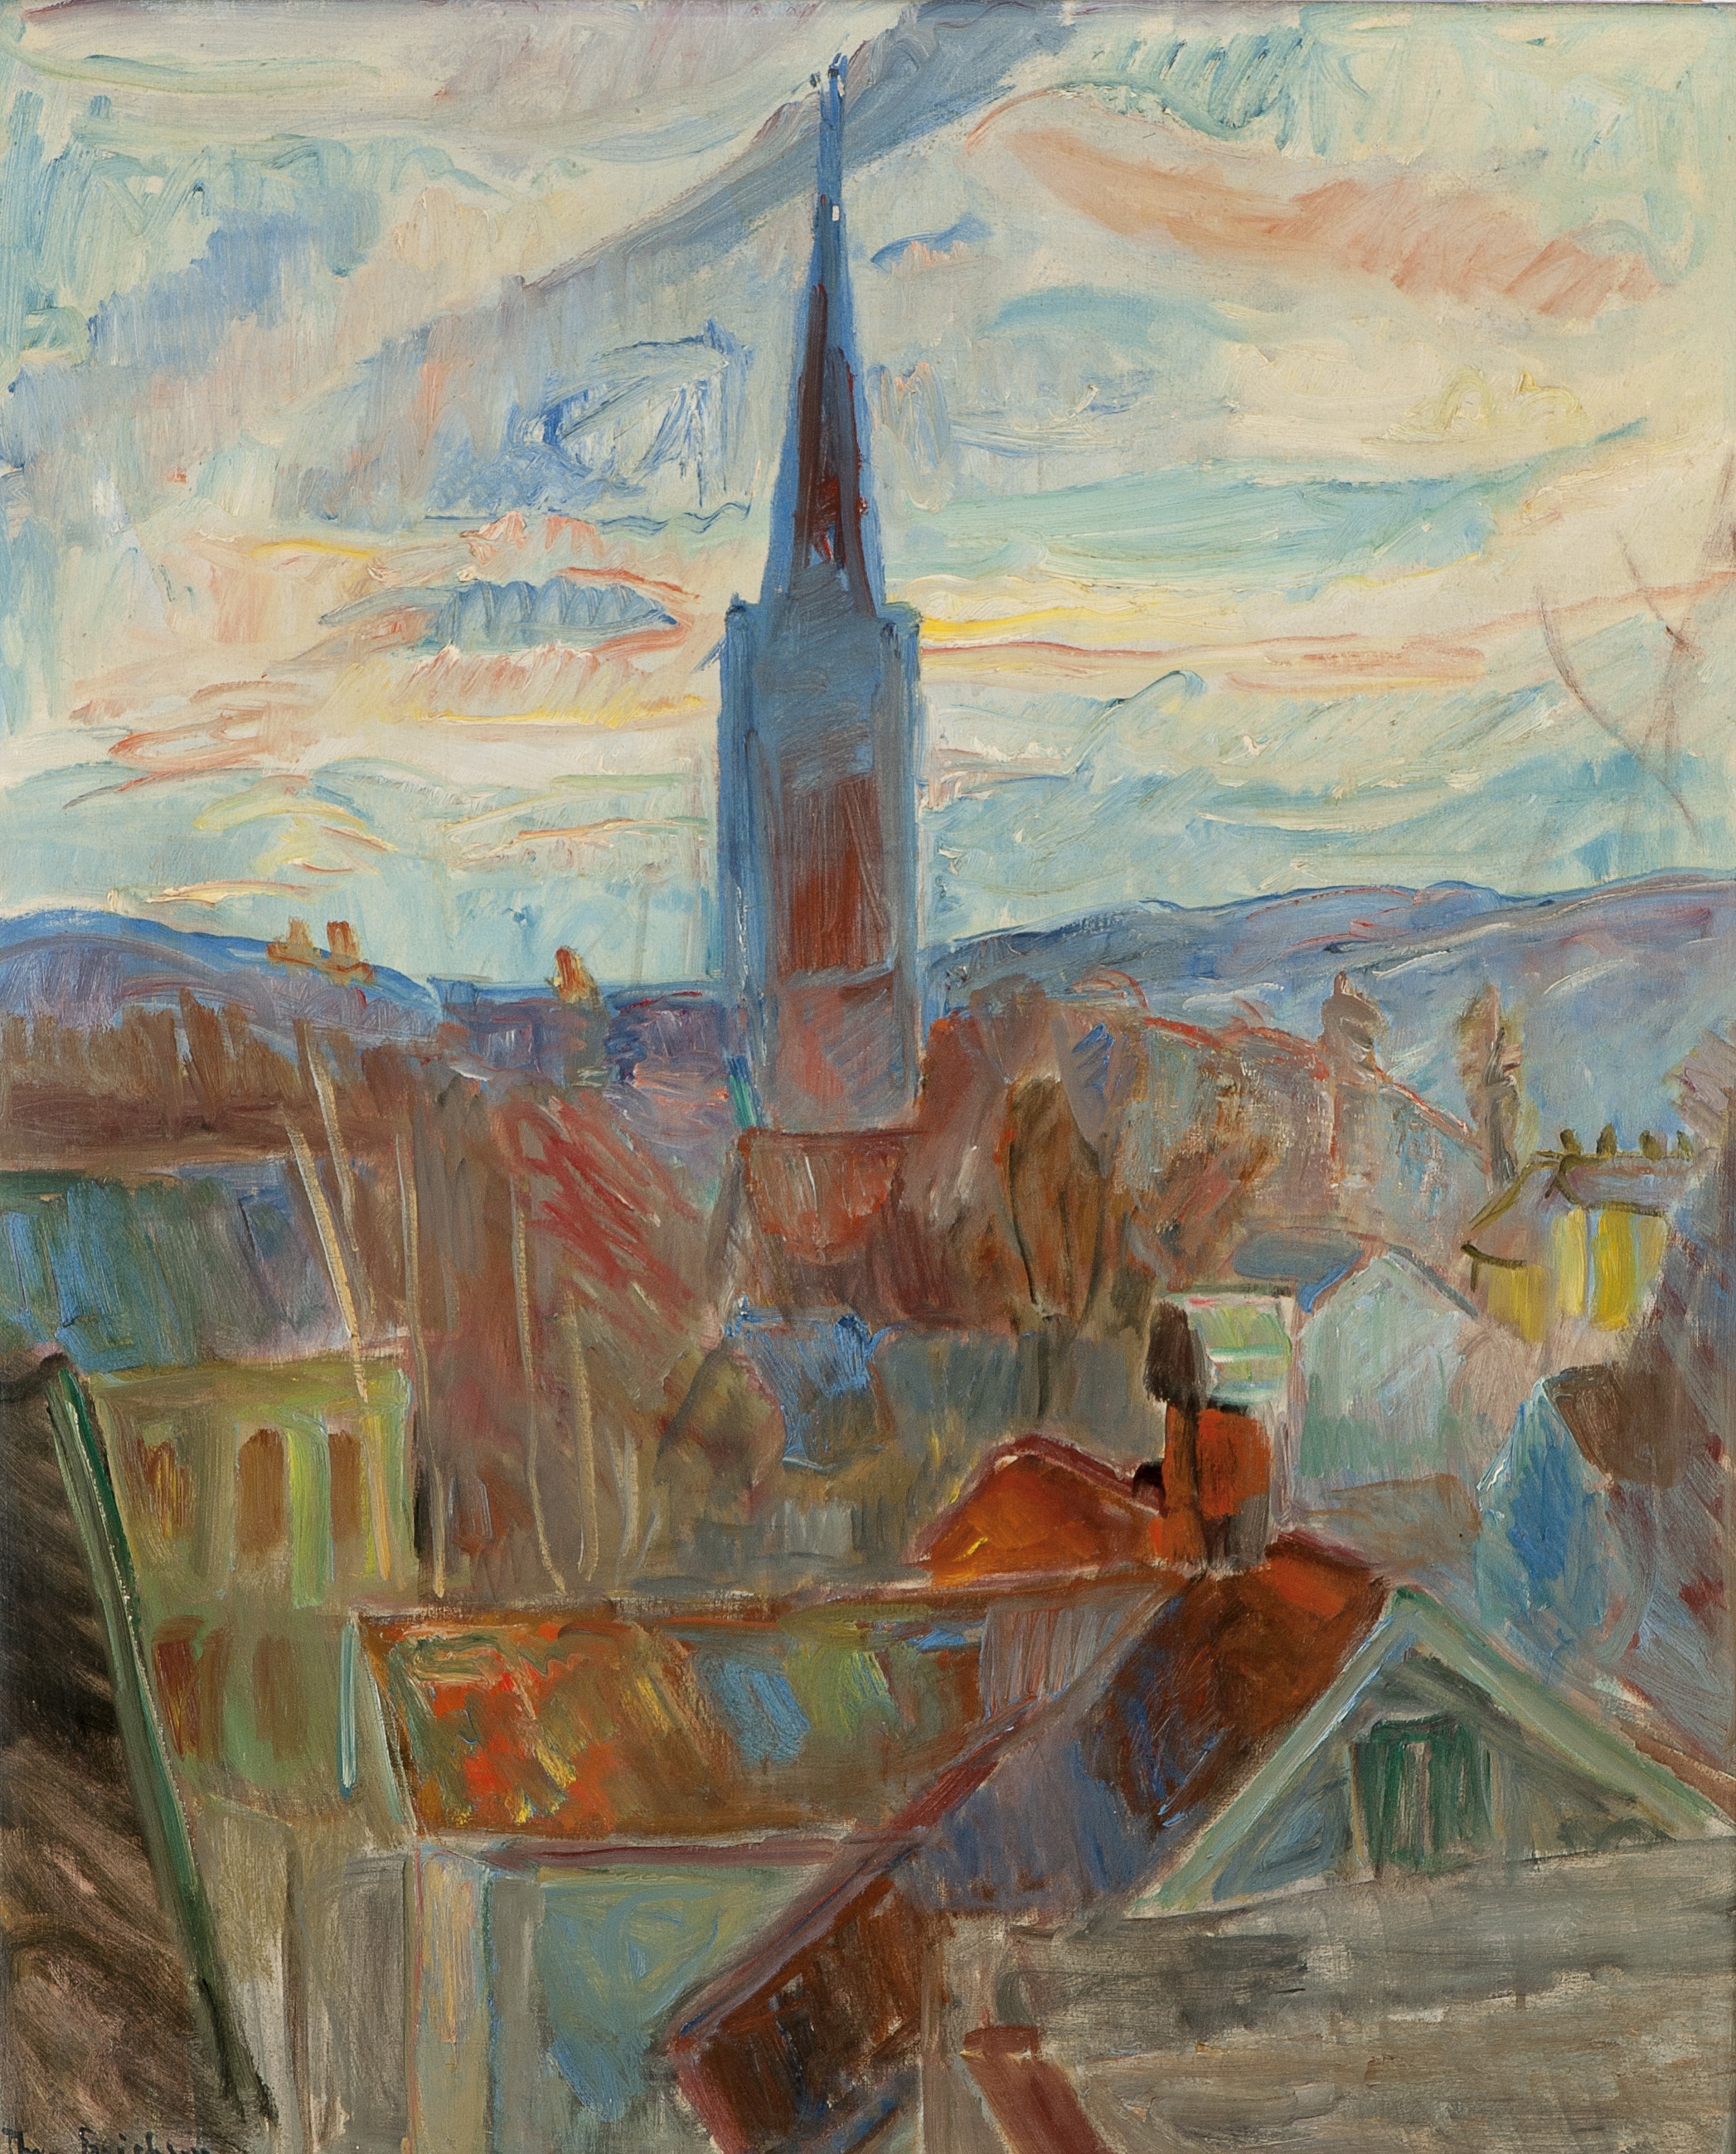 Kirkespiret, Lillehammer by Thorvald Erichsen, 1933